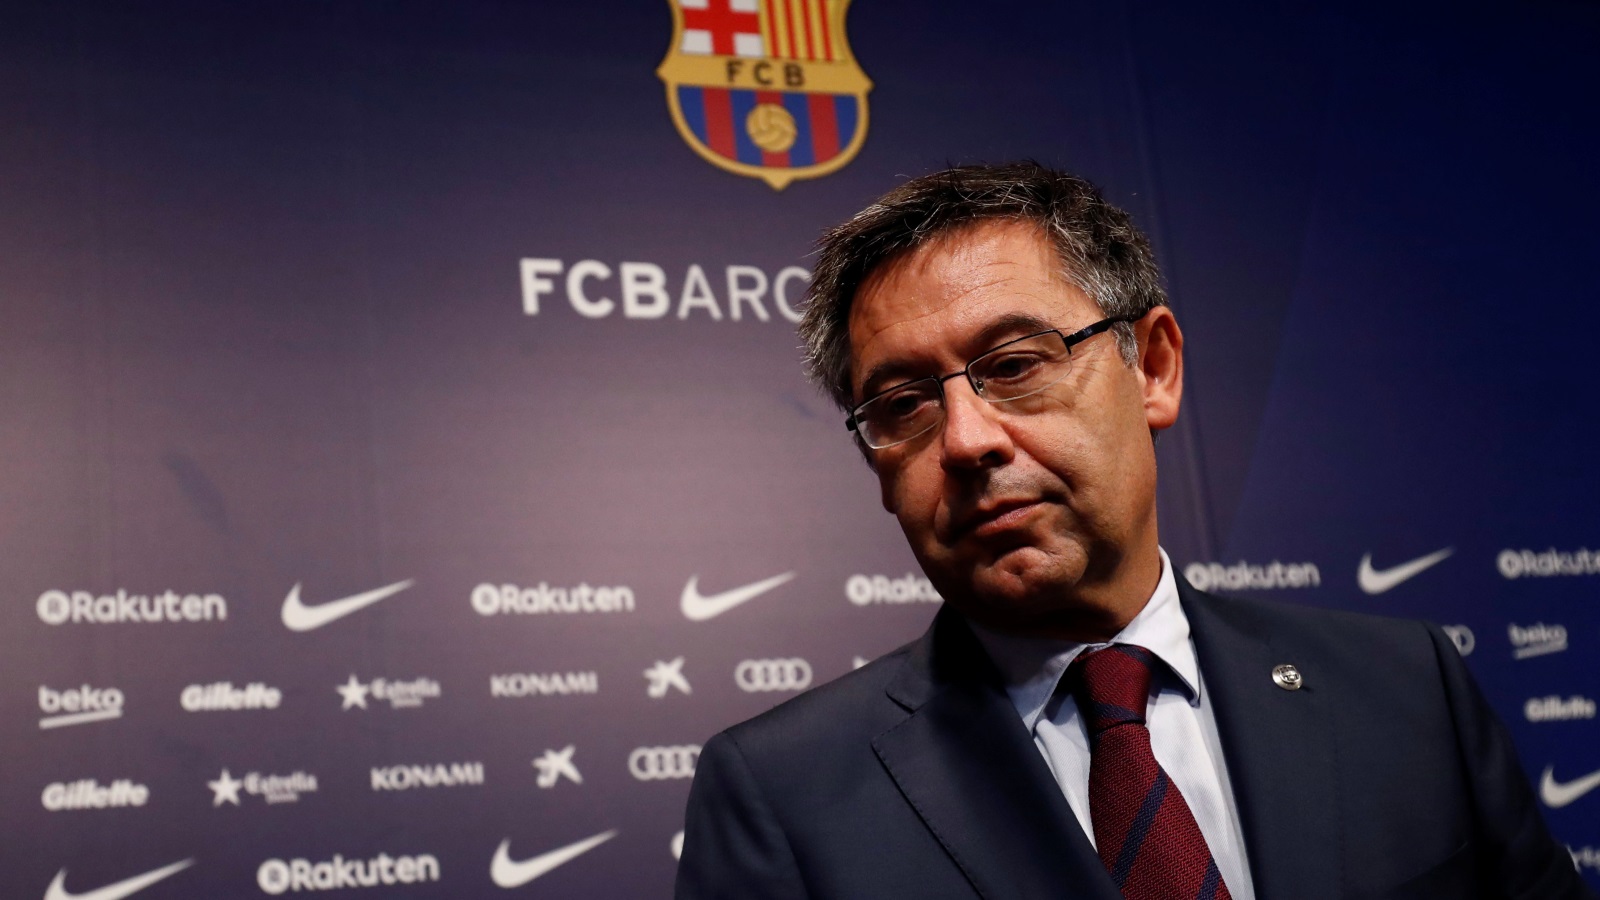 
جوسيب ماريا بارتوميو يشغل حالياً منصب رئيس نادي برشلونة (رويترز)
